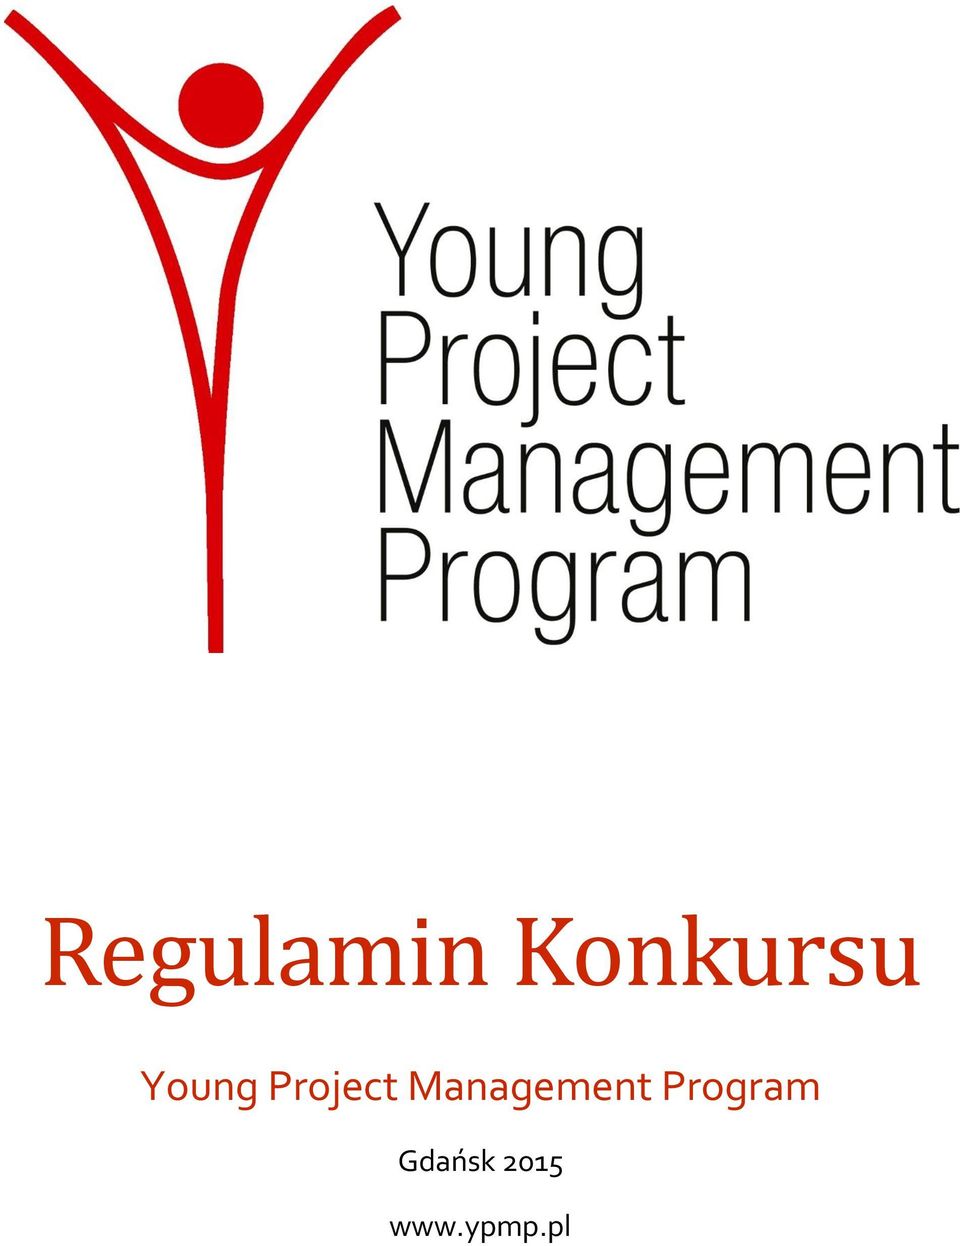 Management Program